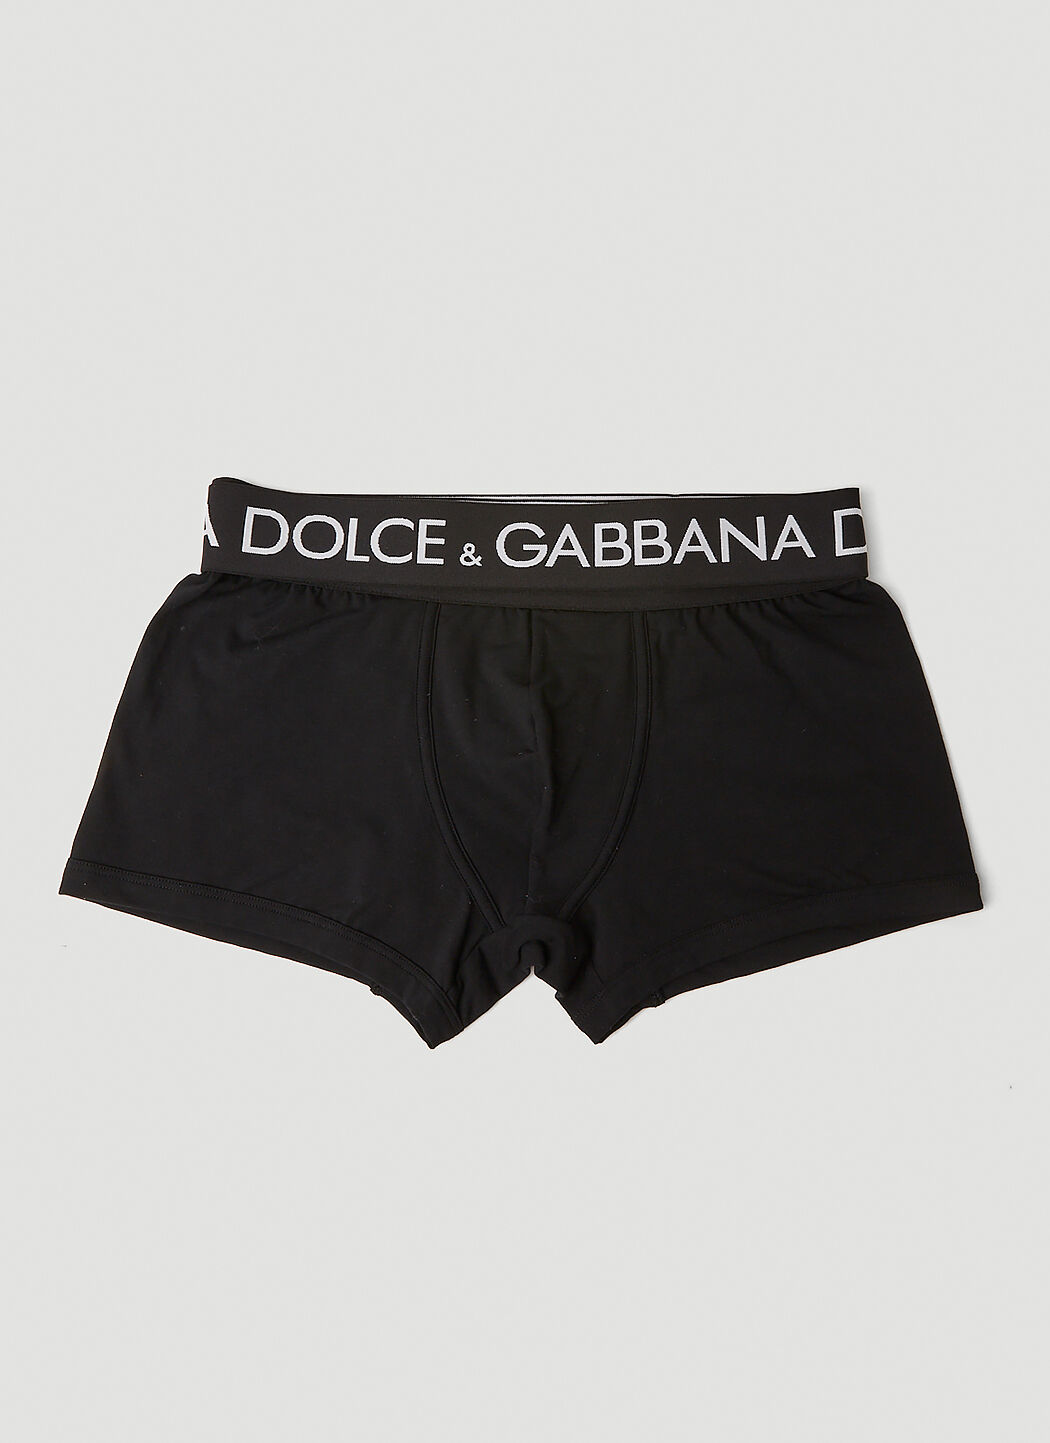 Dolce & Gabbana ロゴウエストバンドボクサーブリーフ Black dol0156003